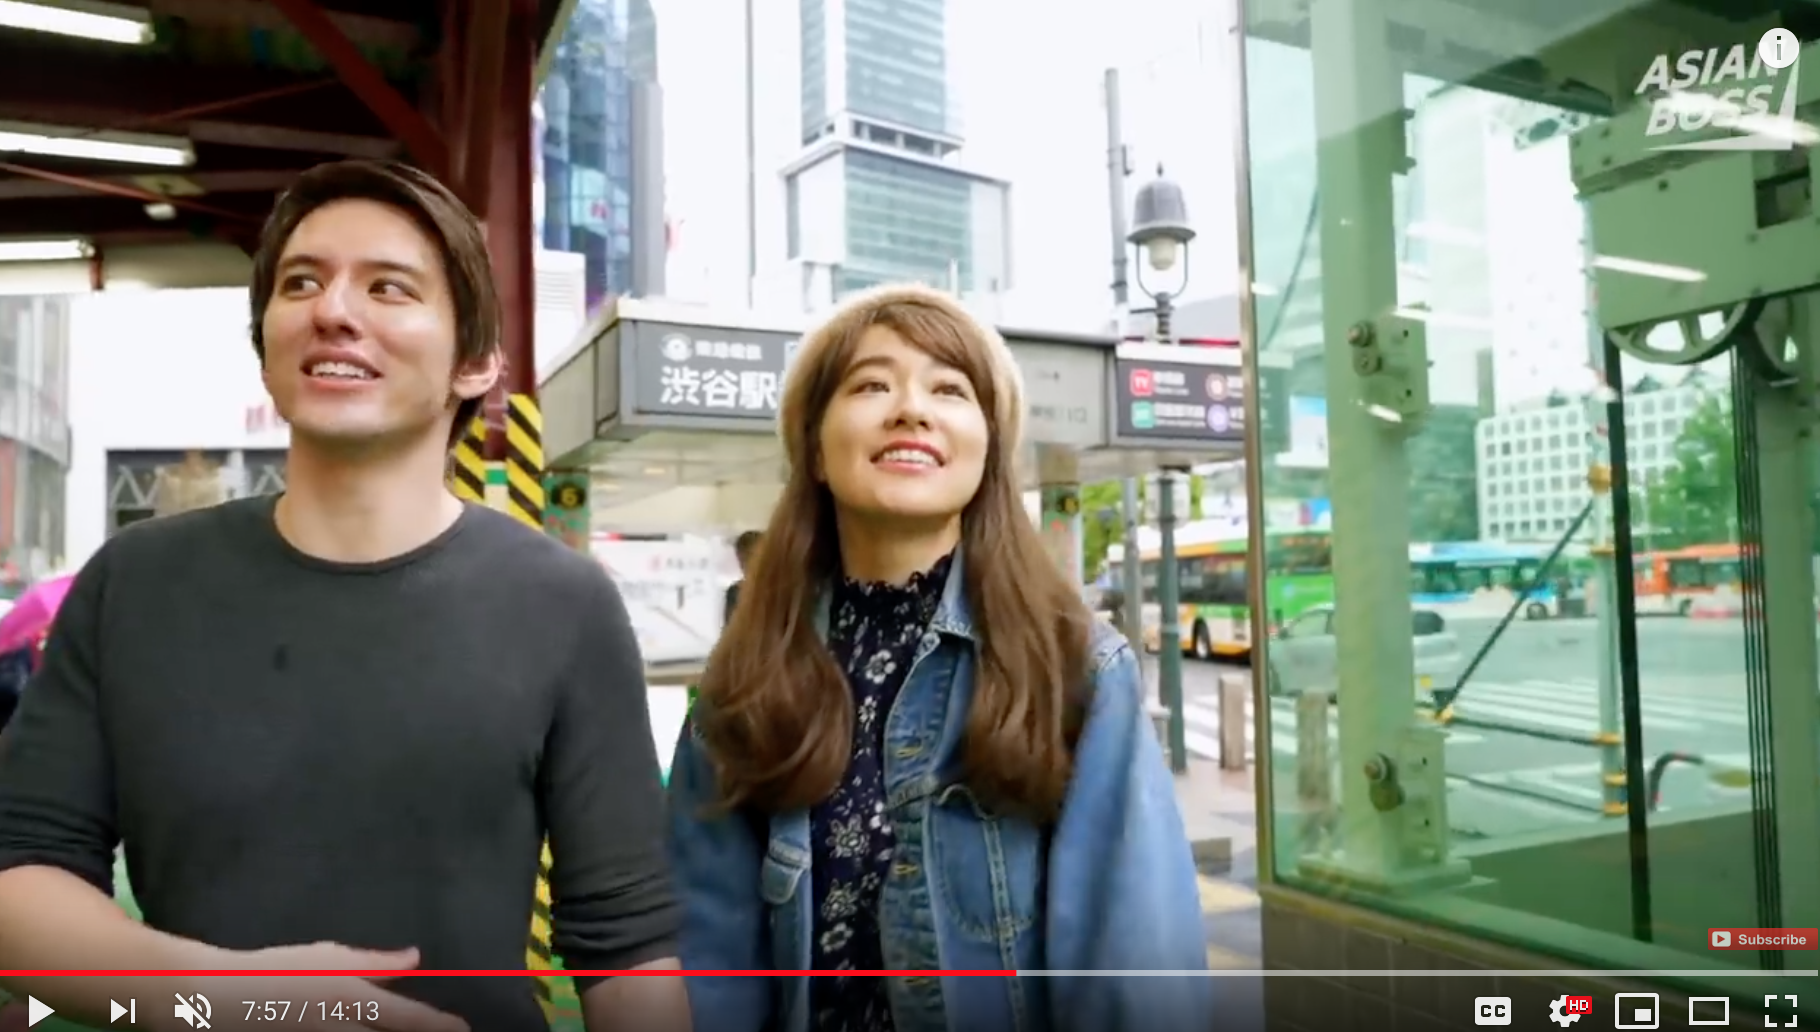 Renting in Japan: Relationship goals or just plain awkward? 【Video】 | SoraNews24 -Japan